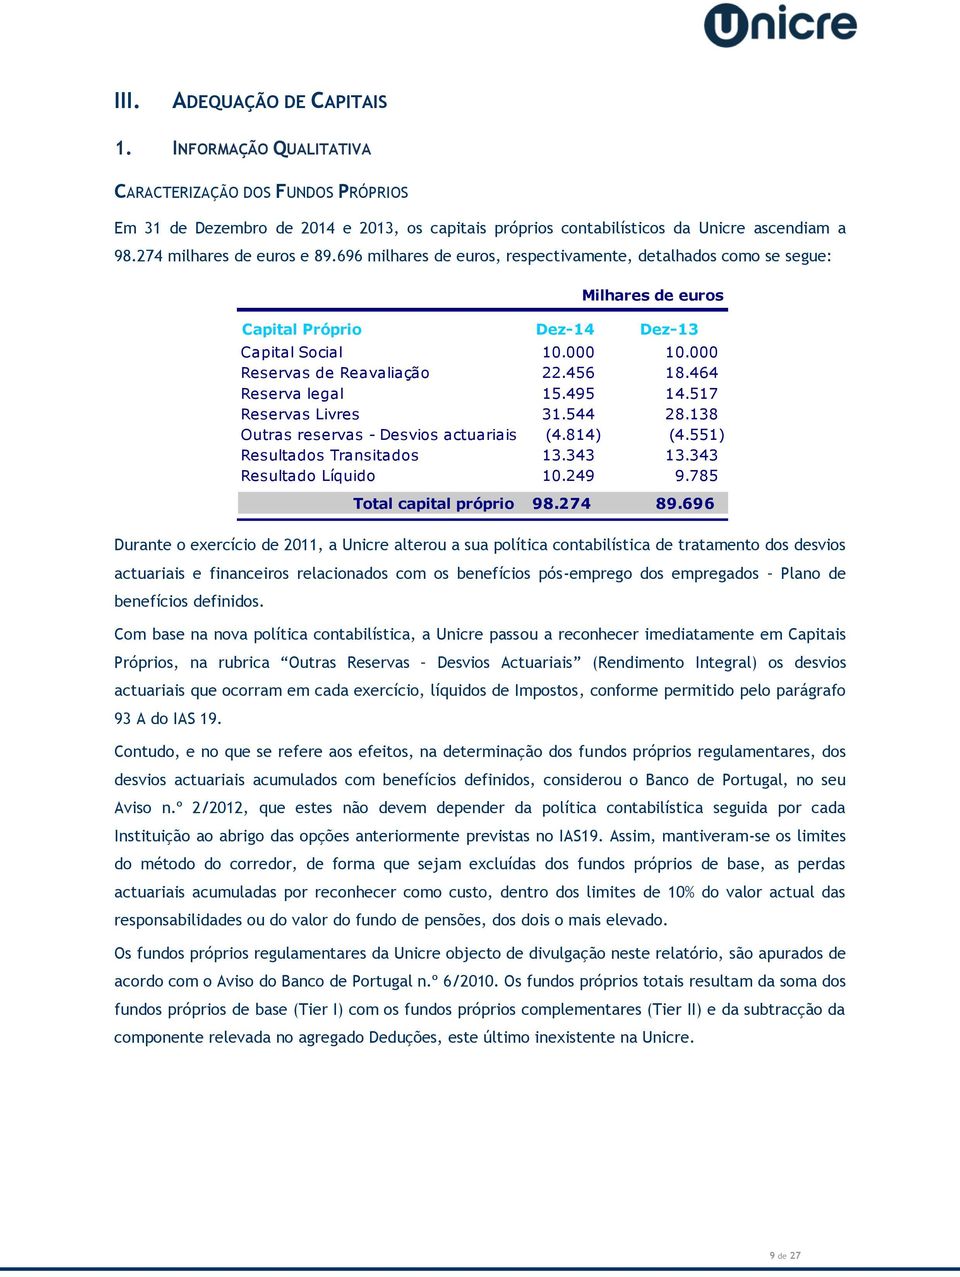 696 milhares de euros, respectivamente, detalhados como se segue: Durante o exercício de 2011, a Unicre alterou a sua política contabilística de tratamento dos desvios actuariais e financeiros